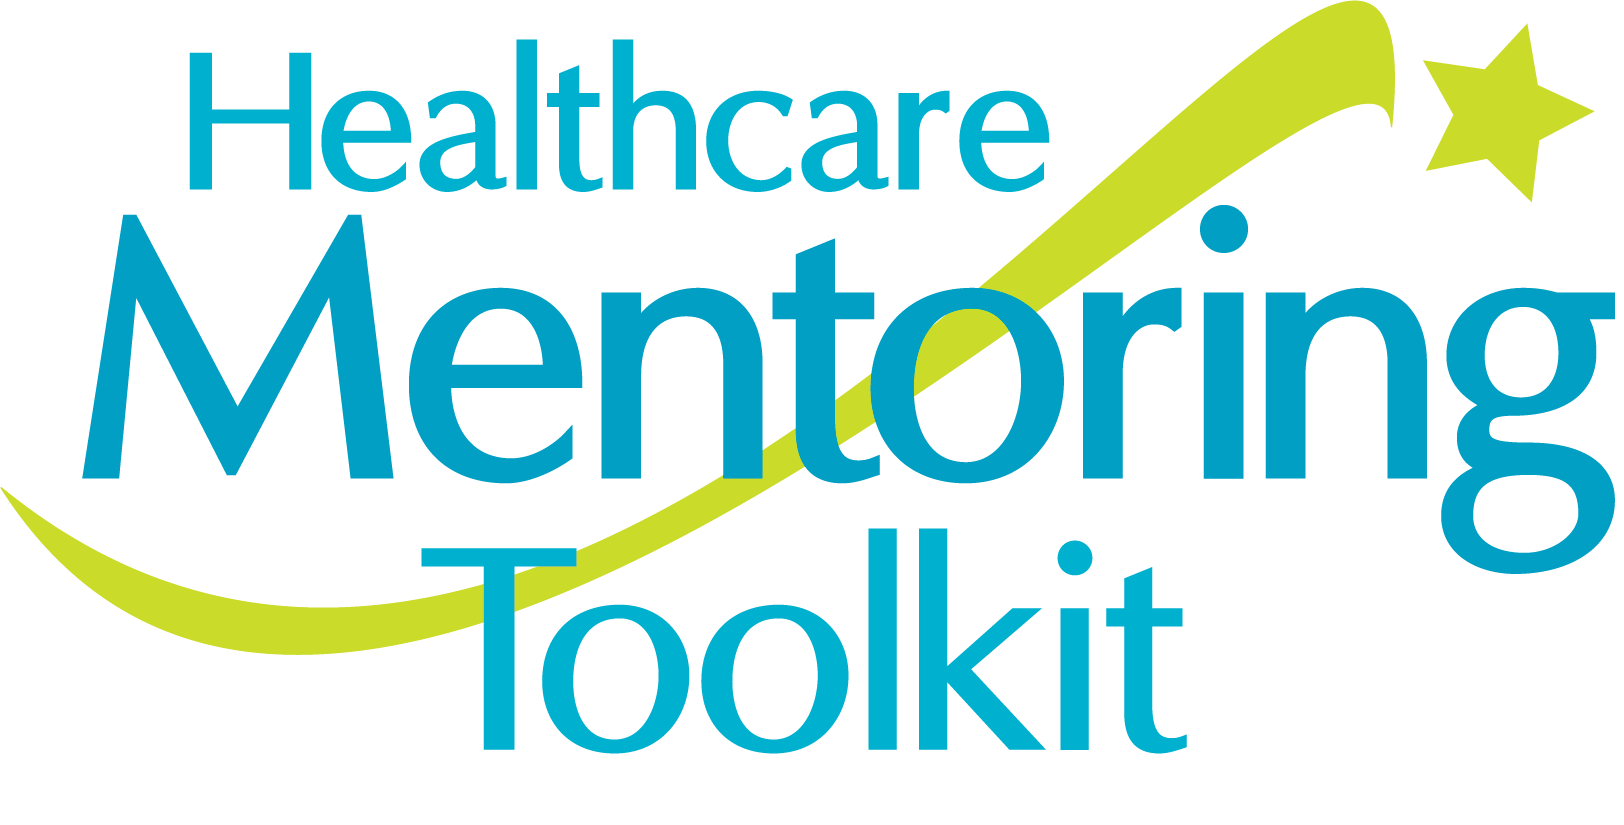 Healthcare Mentoring Toolkit Logo